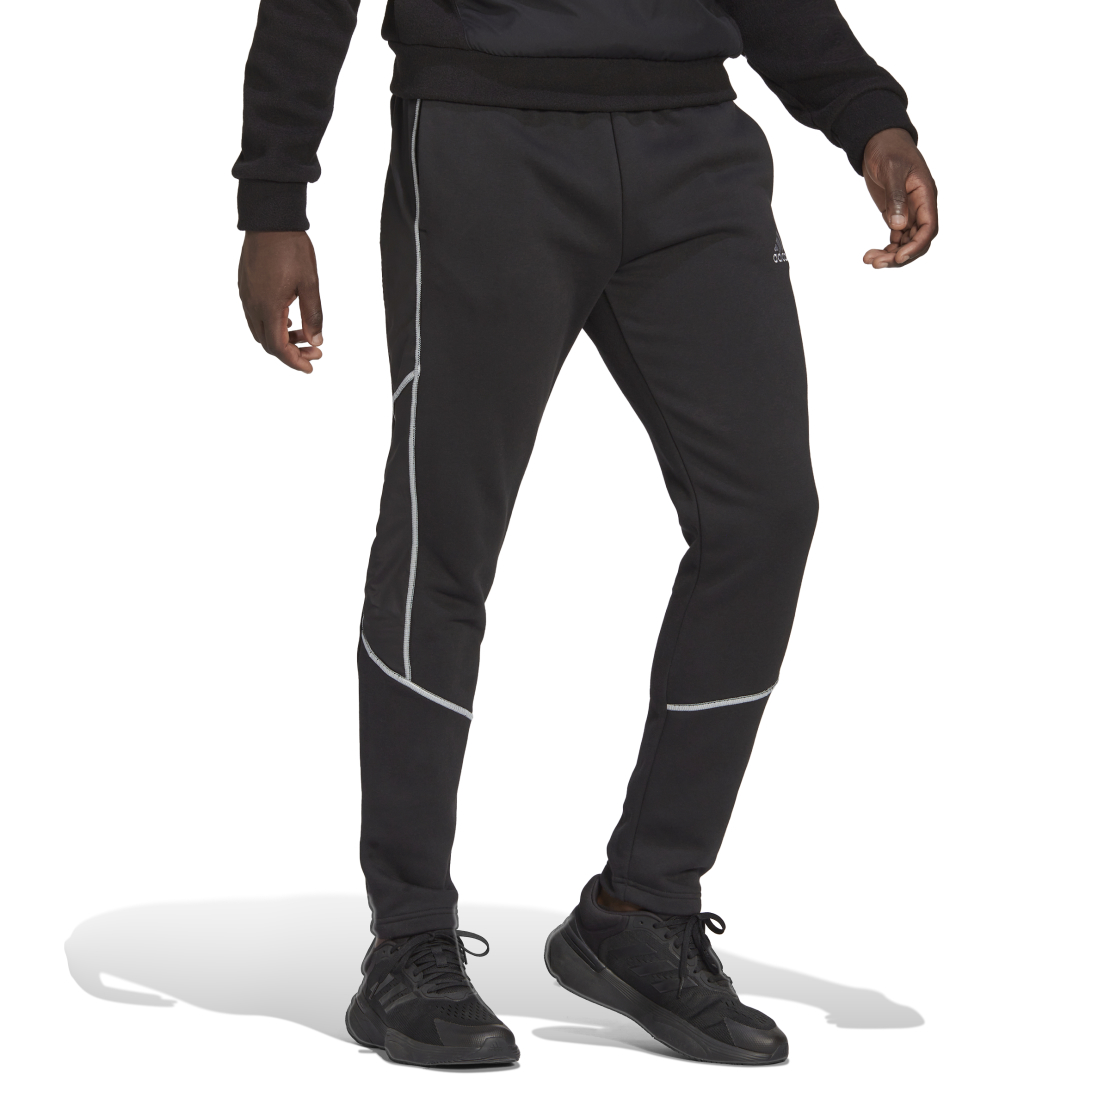 מכנס אדידס חורפי לגבר | Adidas Q4 Fleece Pants